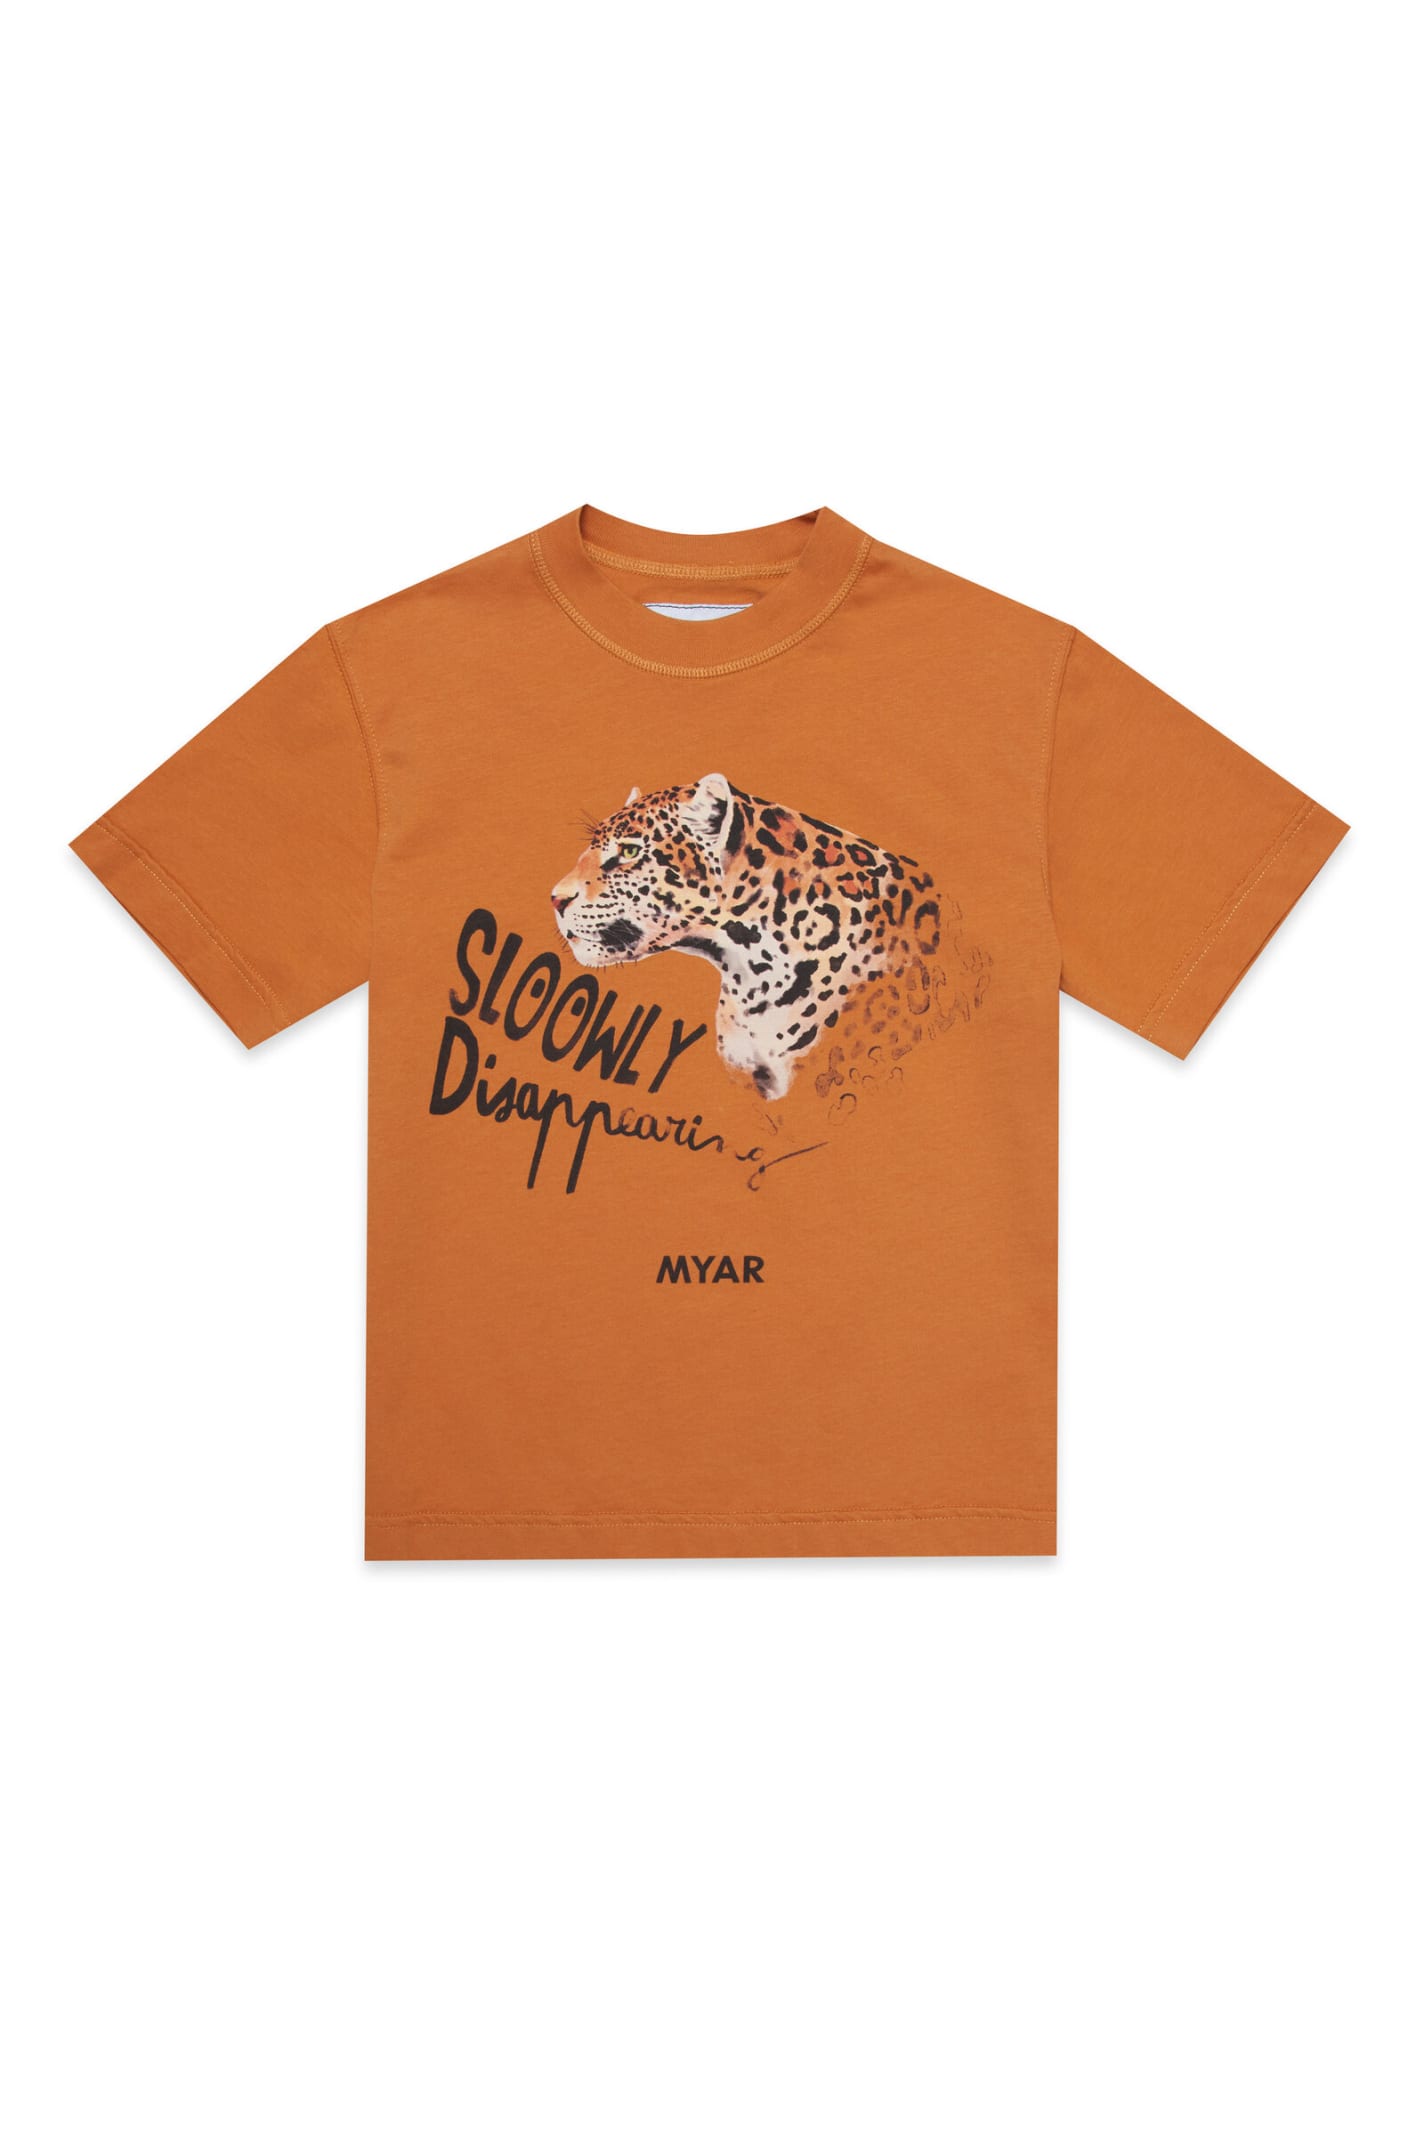 MYAR Myt24u T-shirt Myar Deadstock Orange Crewneck T-shirt With Digital Print Sloowly